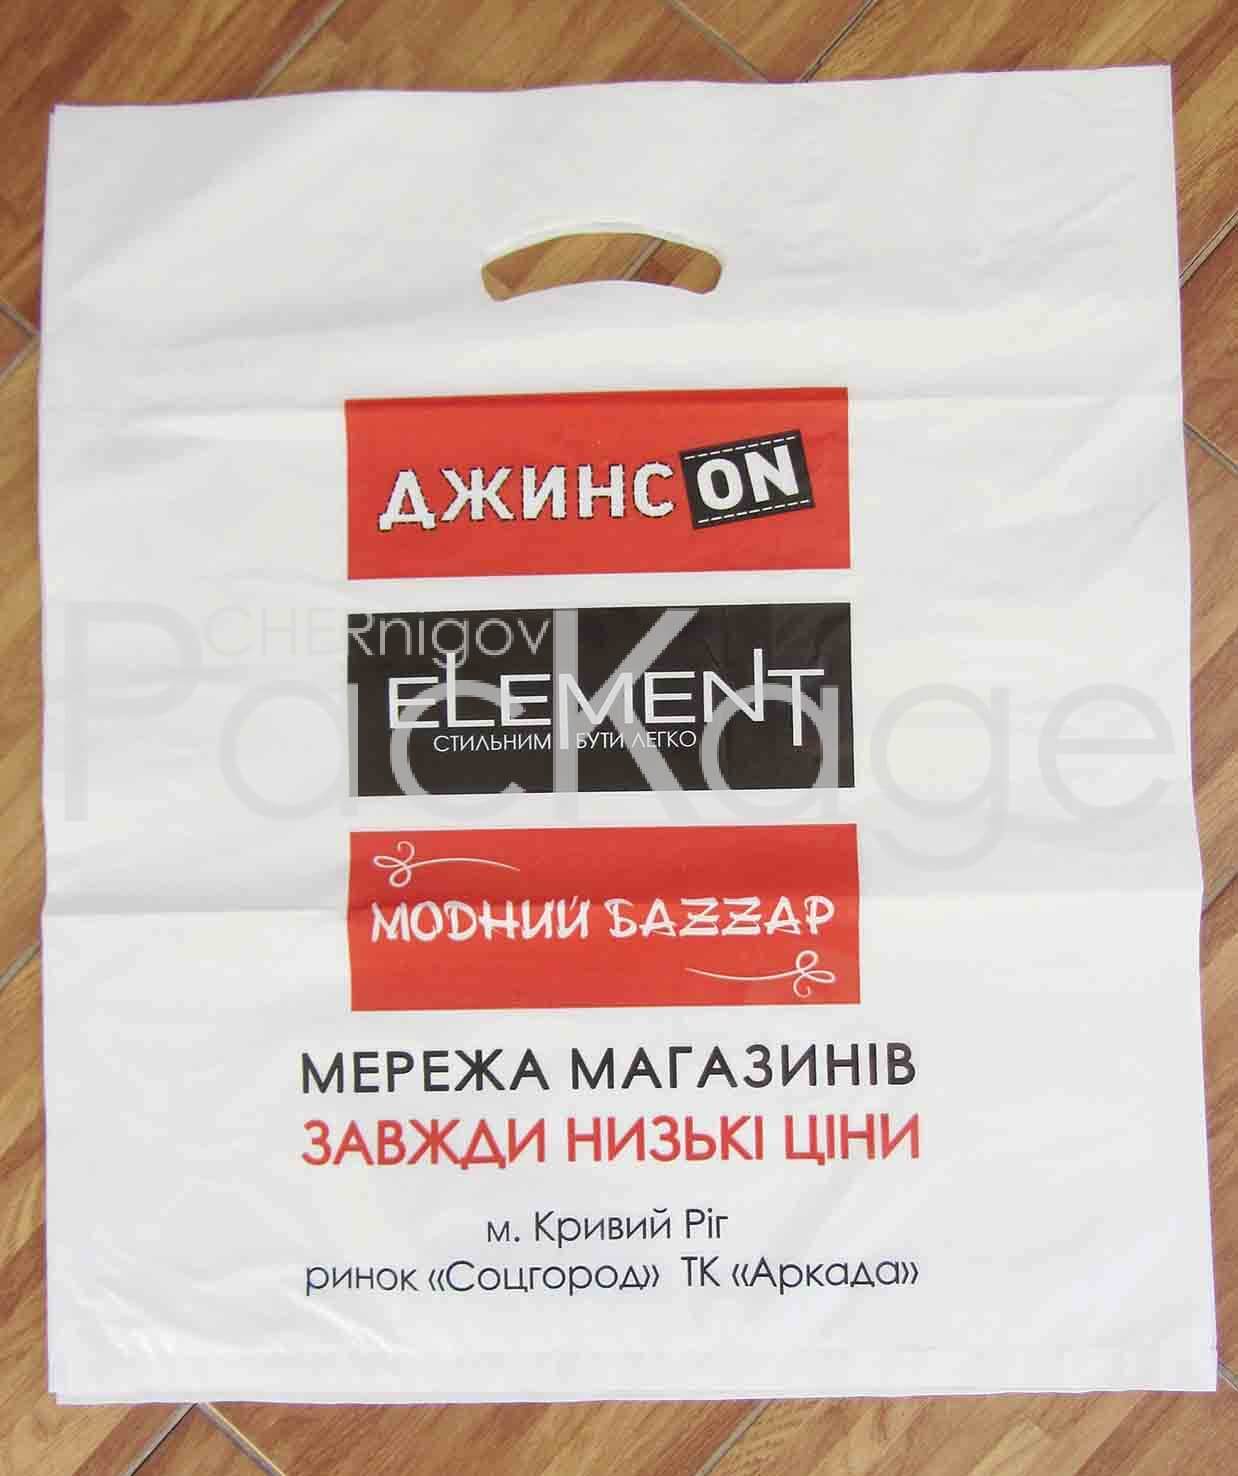 Как хранить целлофановые пакеты Chernigov Package - Фото IMG_6357